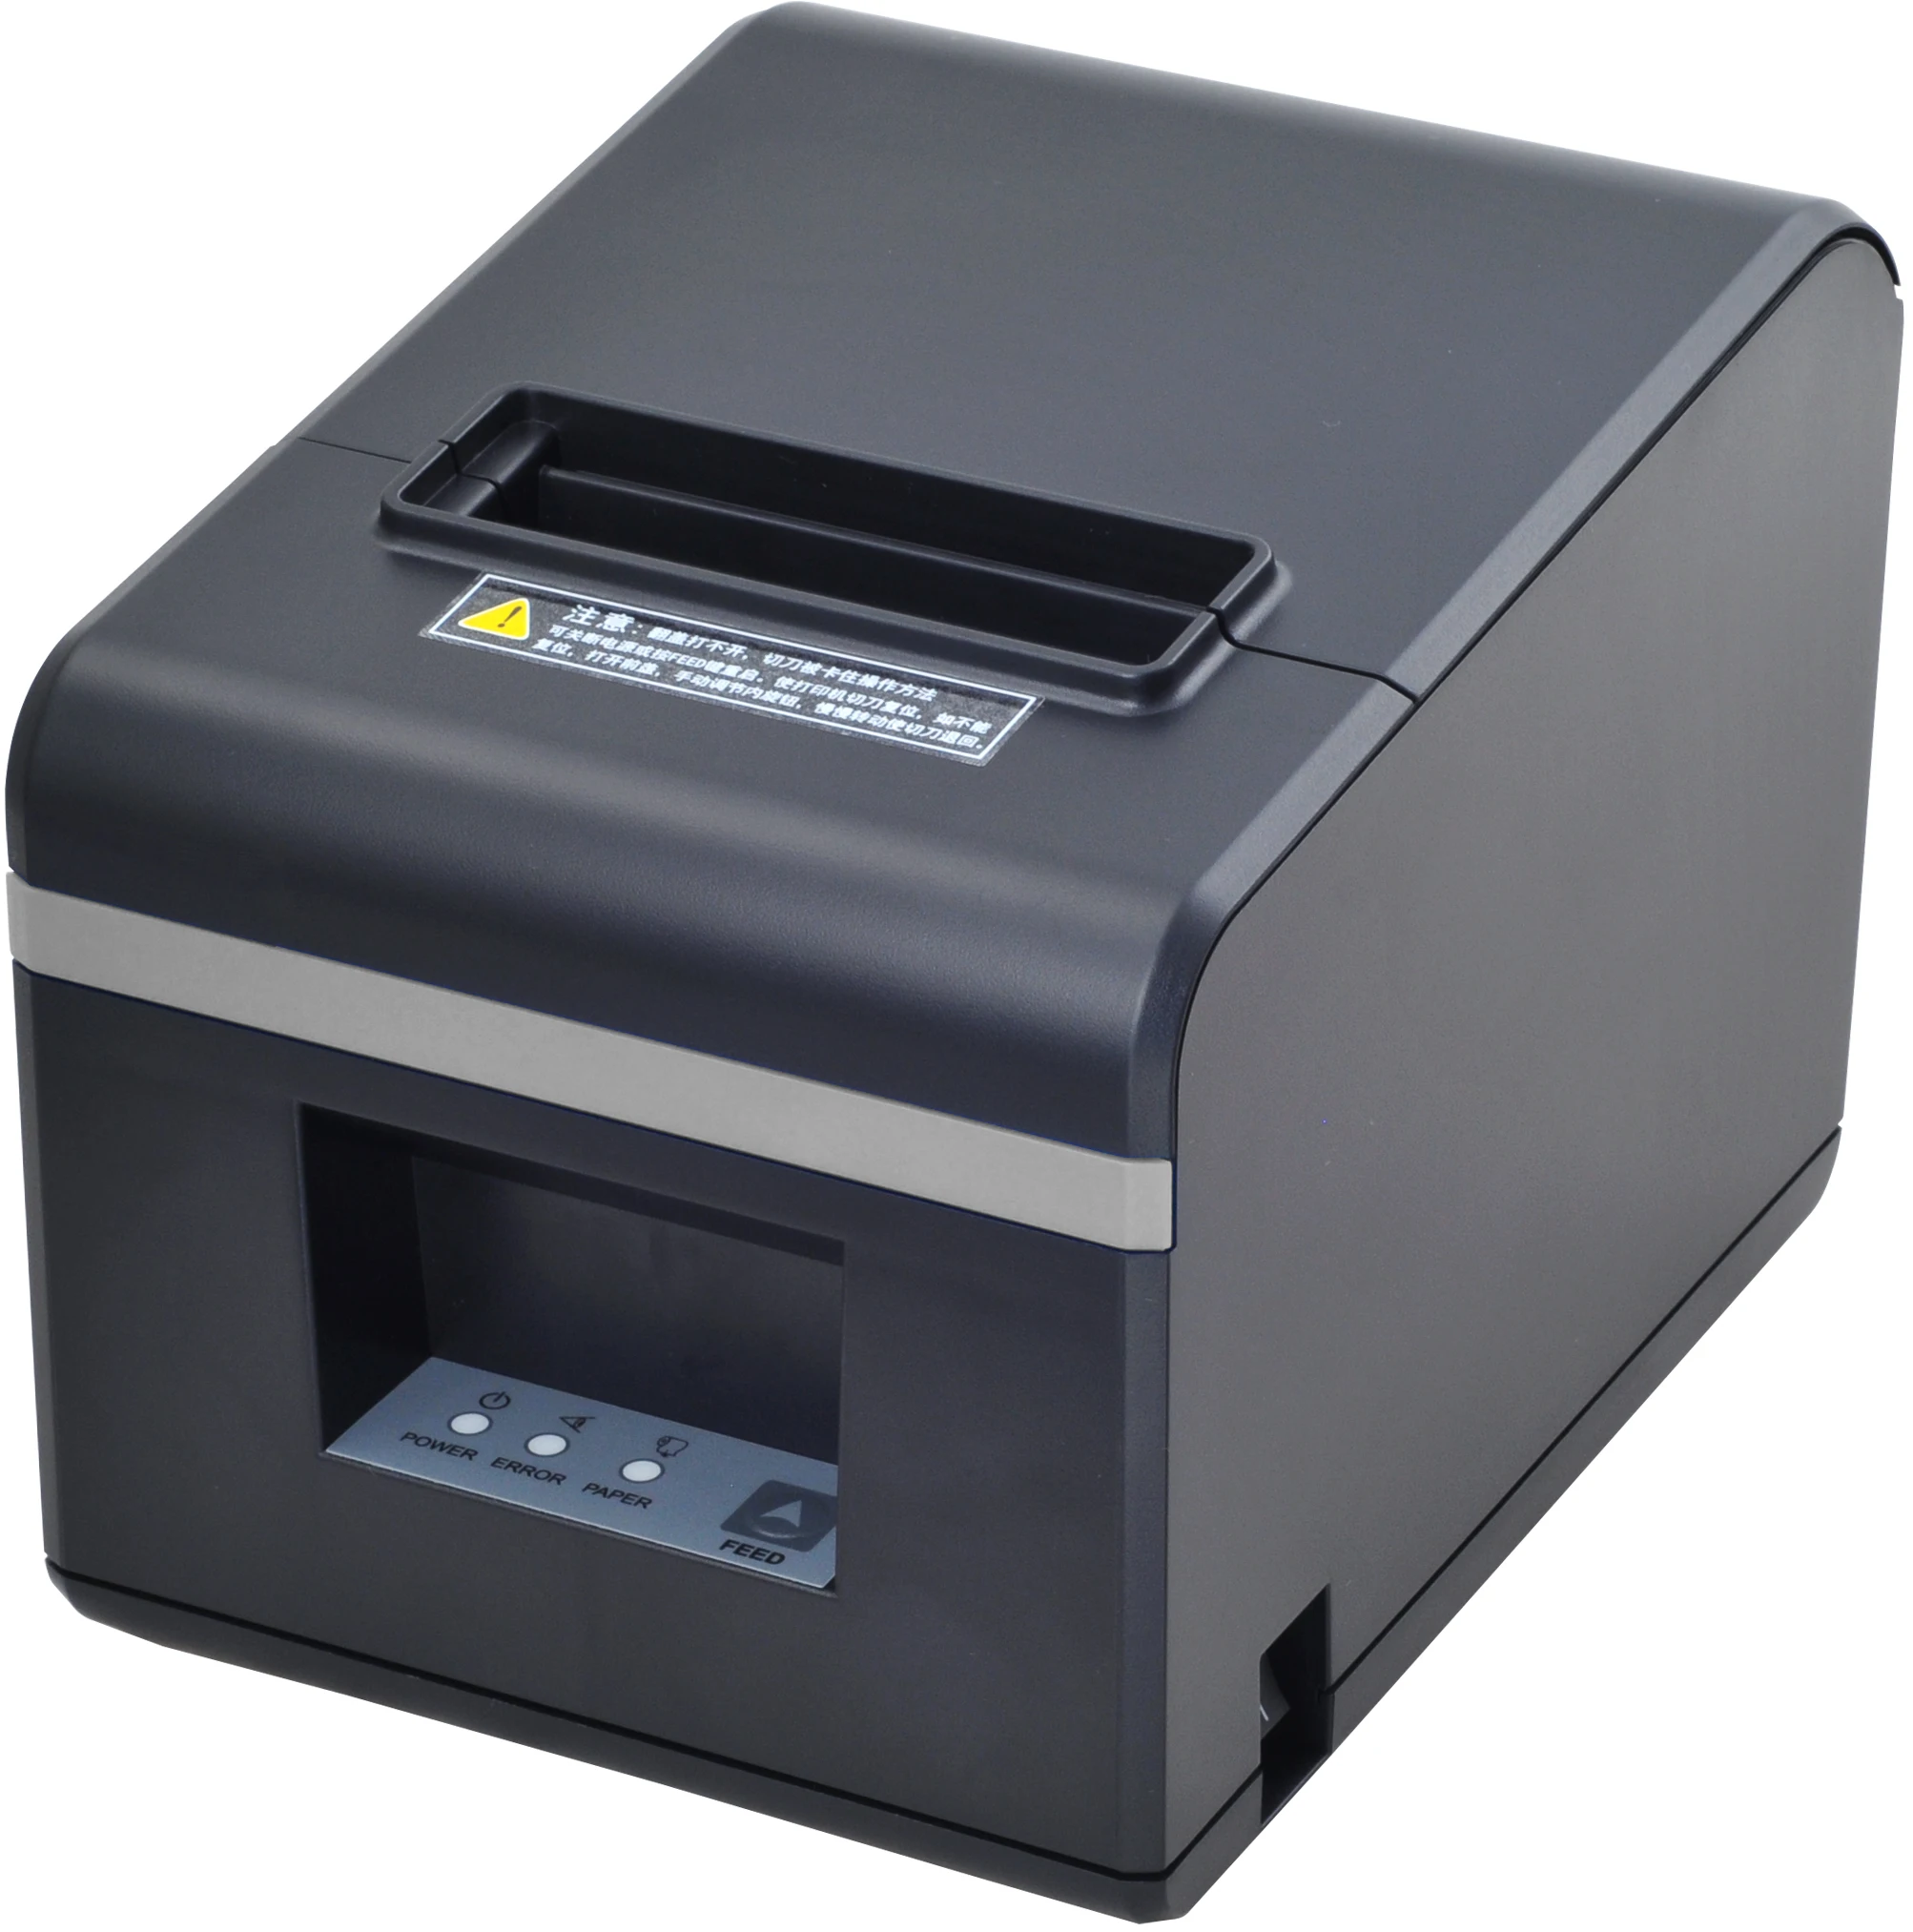 Cheap xprinter 80mm printer POS Bill printer thermal with driver download, Black color